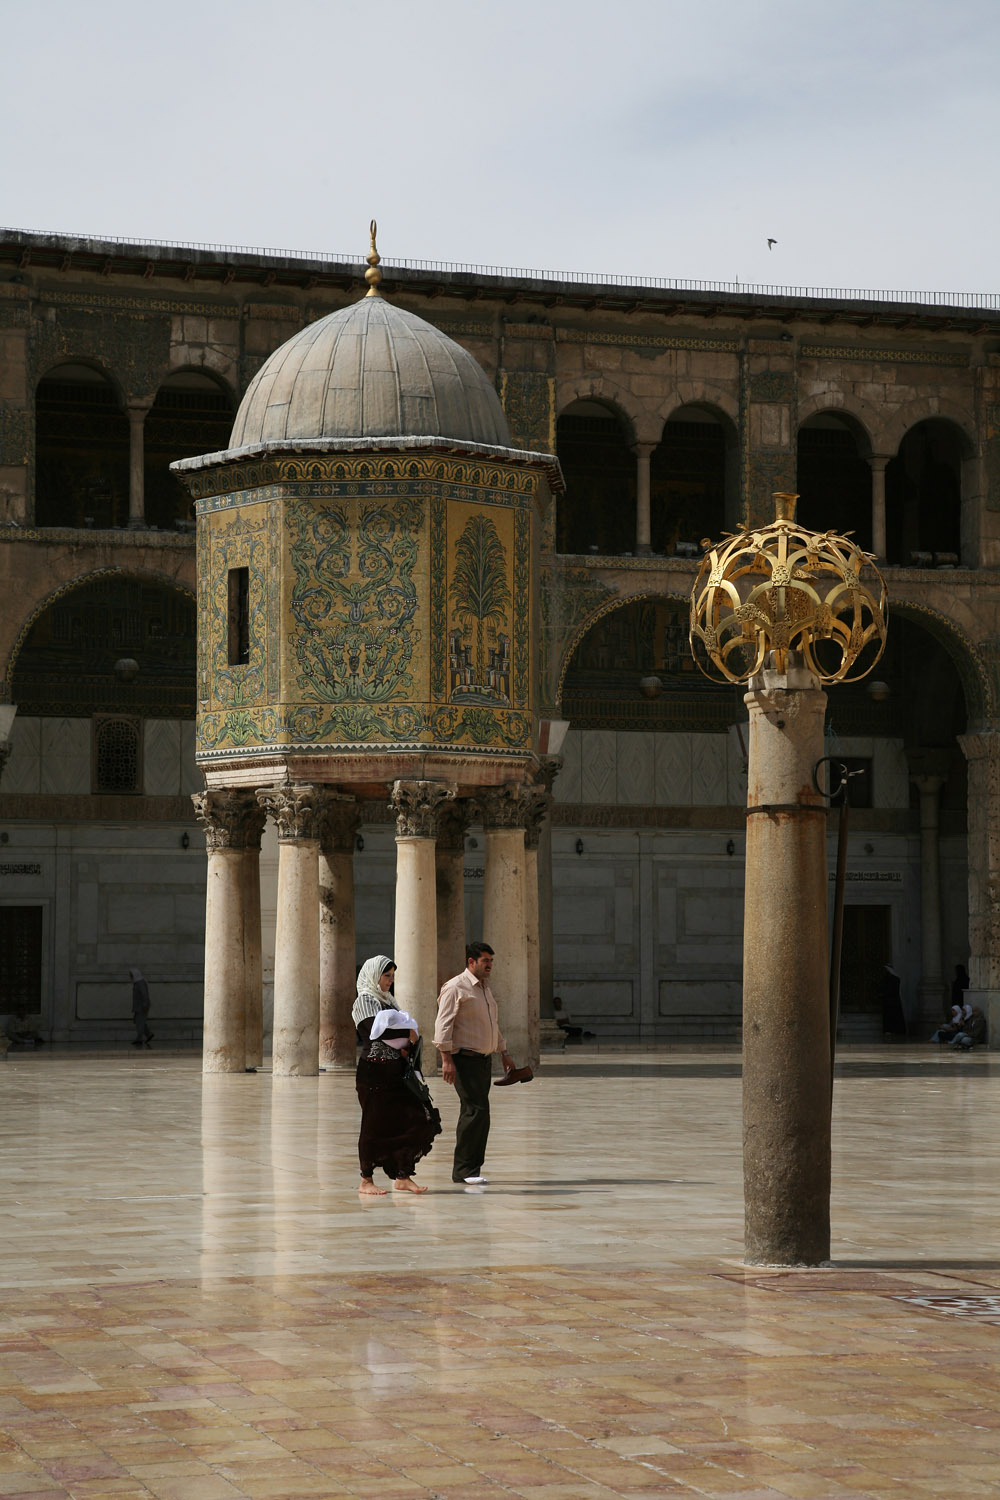 bill-hocker-courtyard-umayyad-mosque-damascus-syria-2008